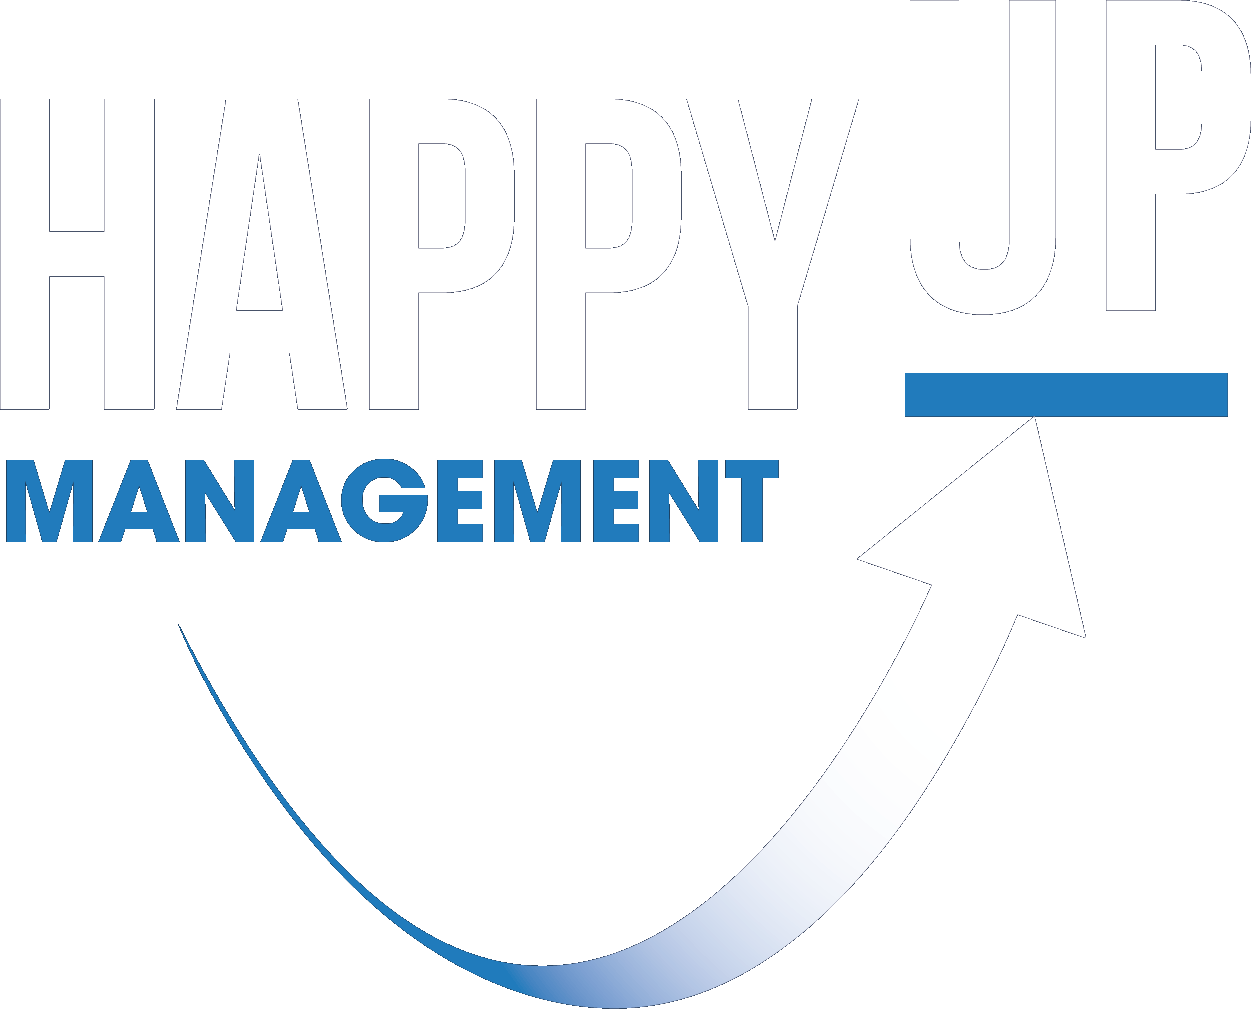 Logo Management